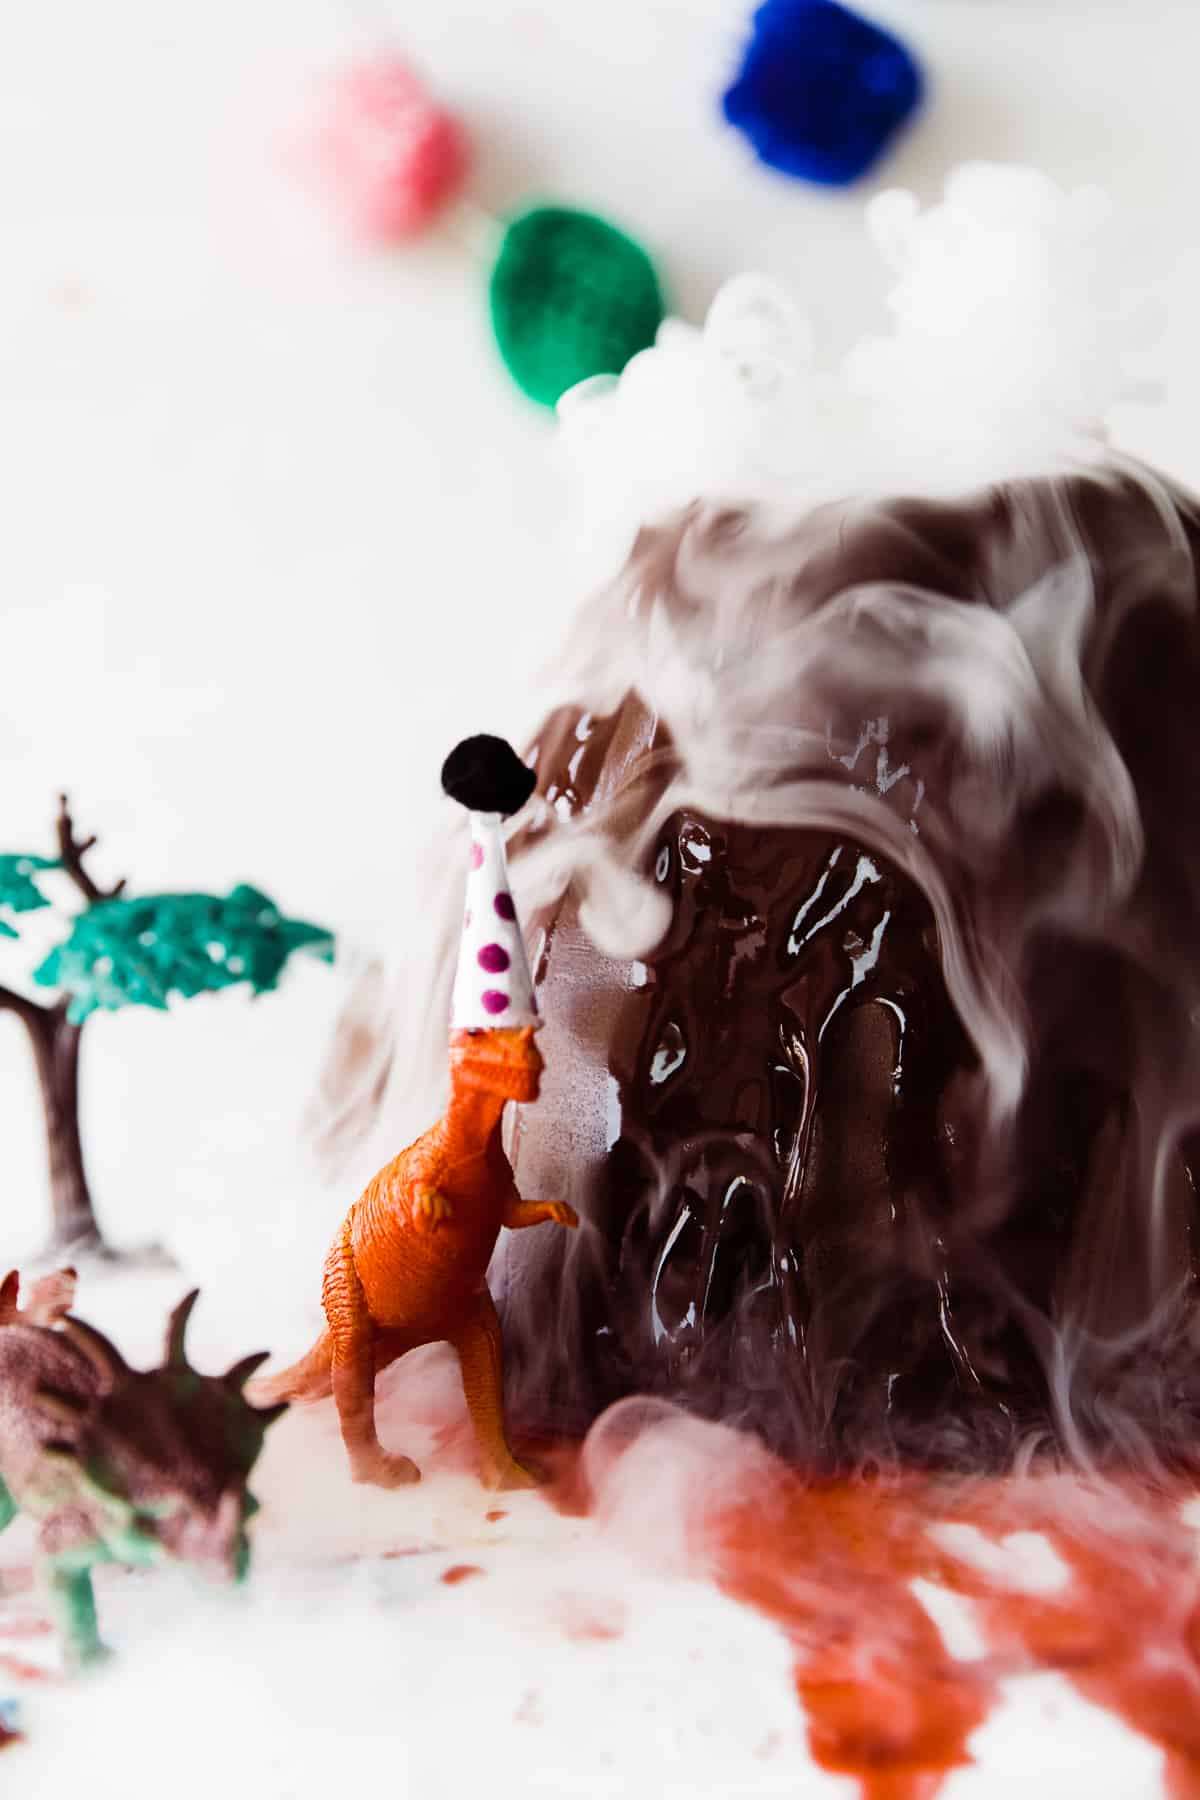 dinosaur with party hat on cake next to smoking volcano